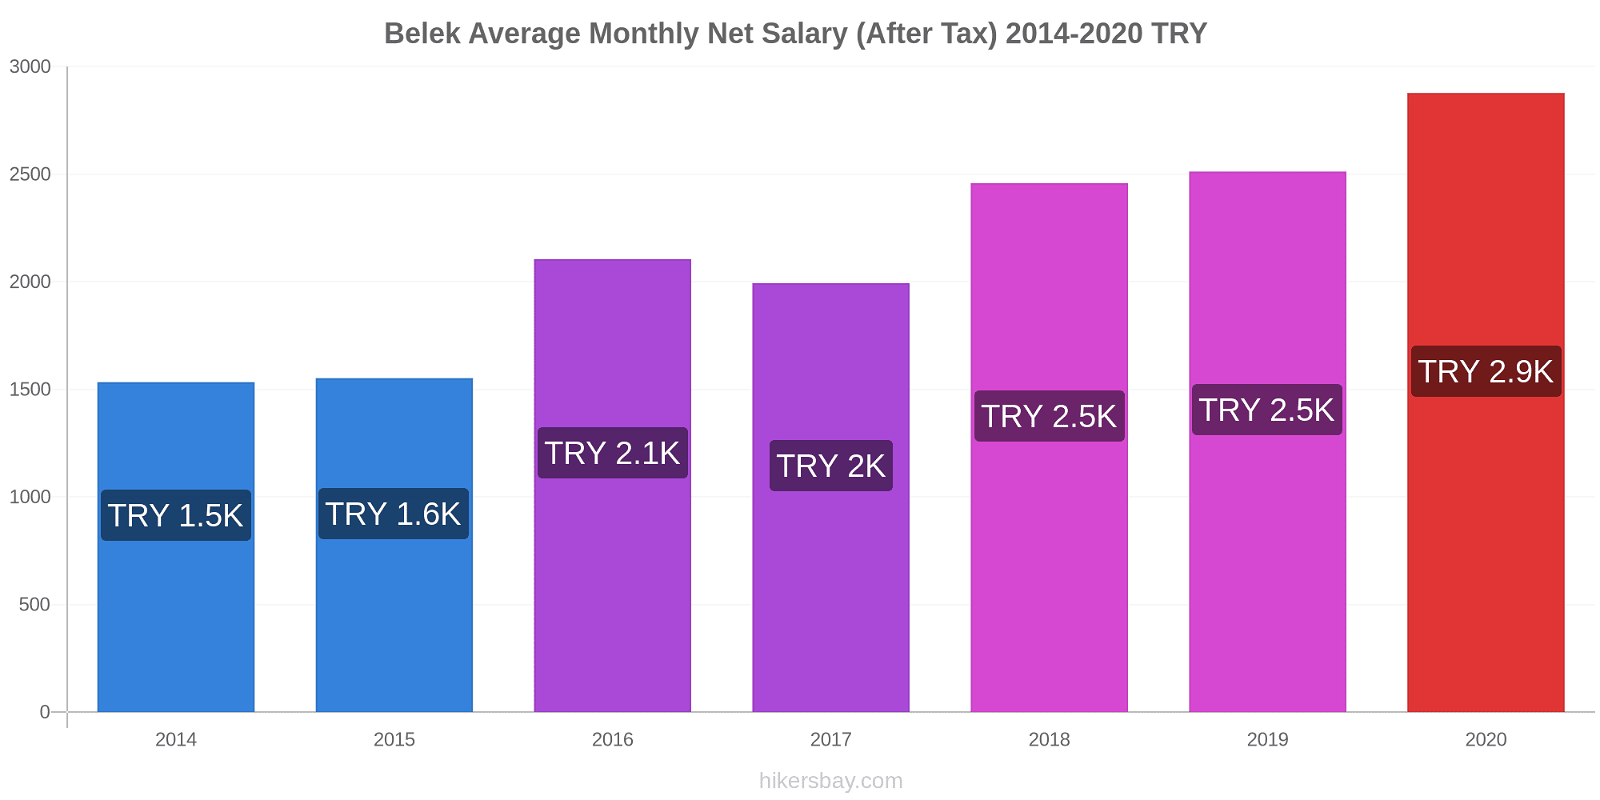 Belek price changes Average Monthly Net Salary (After Tax) hikersbay.com